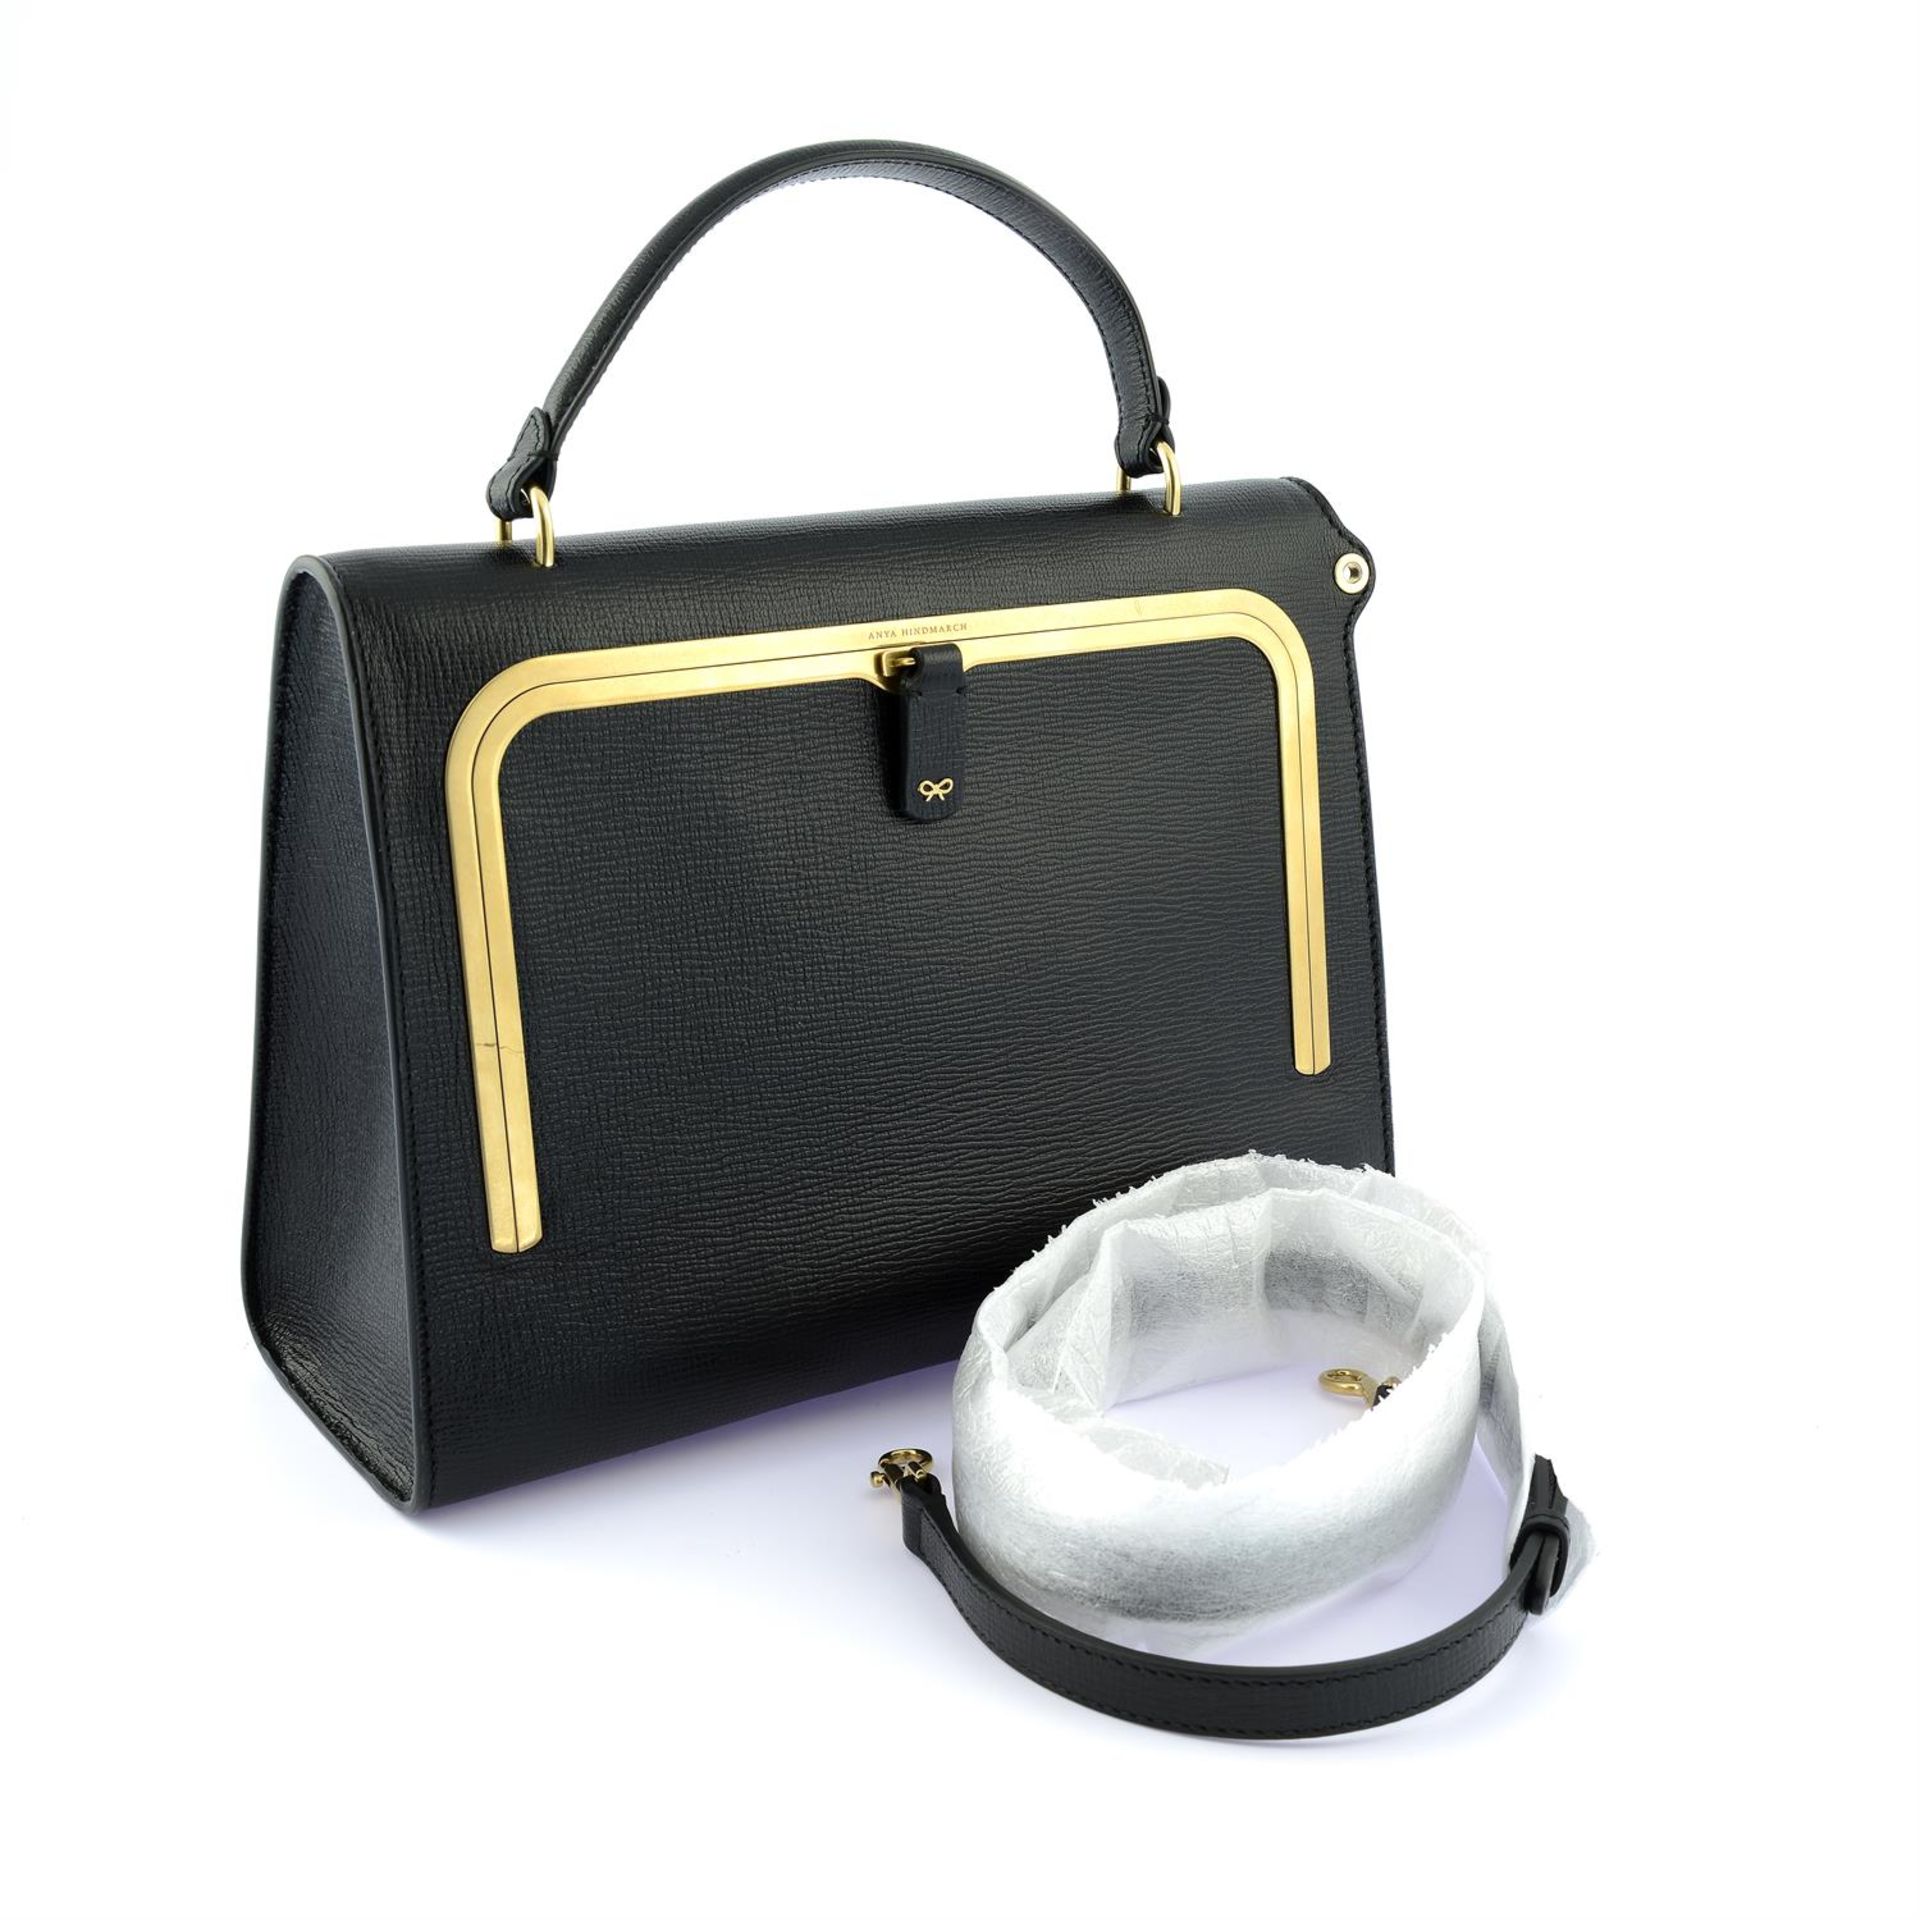 ANYA HINDMARCH - a black leather handbag. - Image 5 of 5